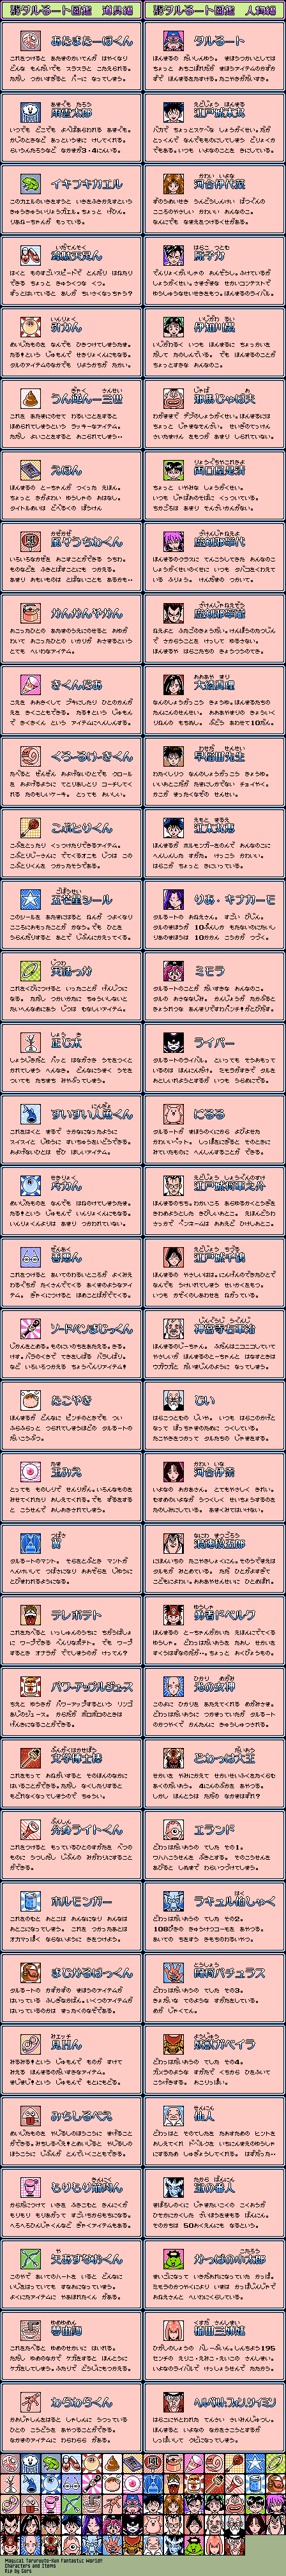 Magical Taruruuto-Kun 1: Fantastic World!! (JPN) - Items and Characters